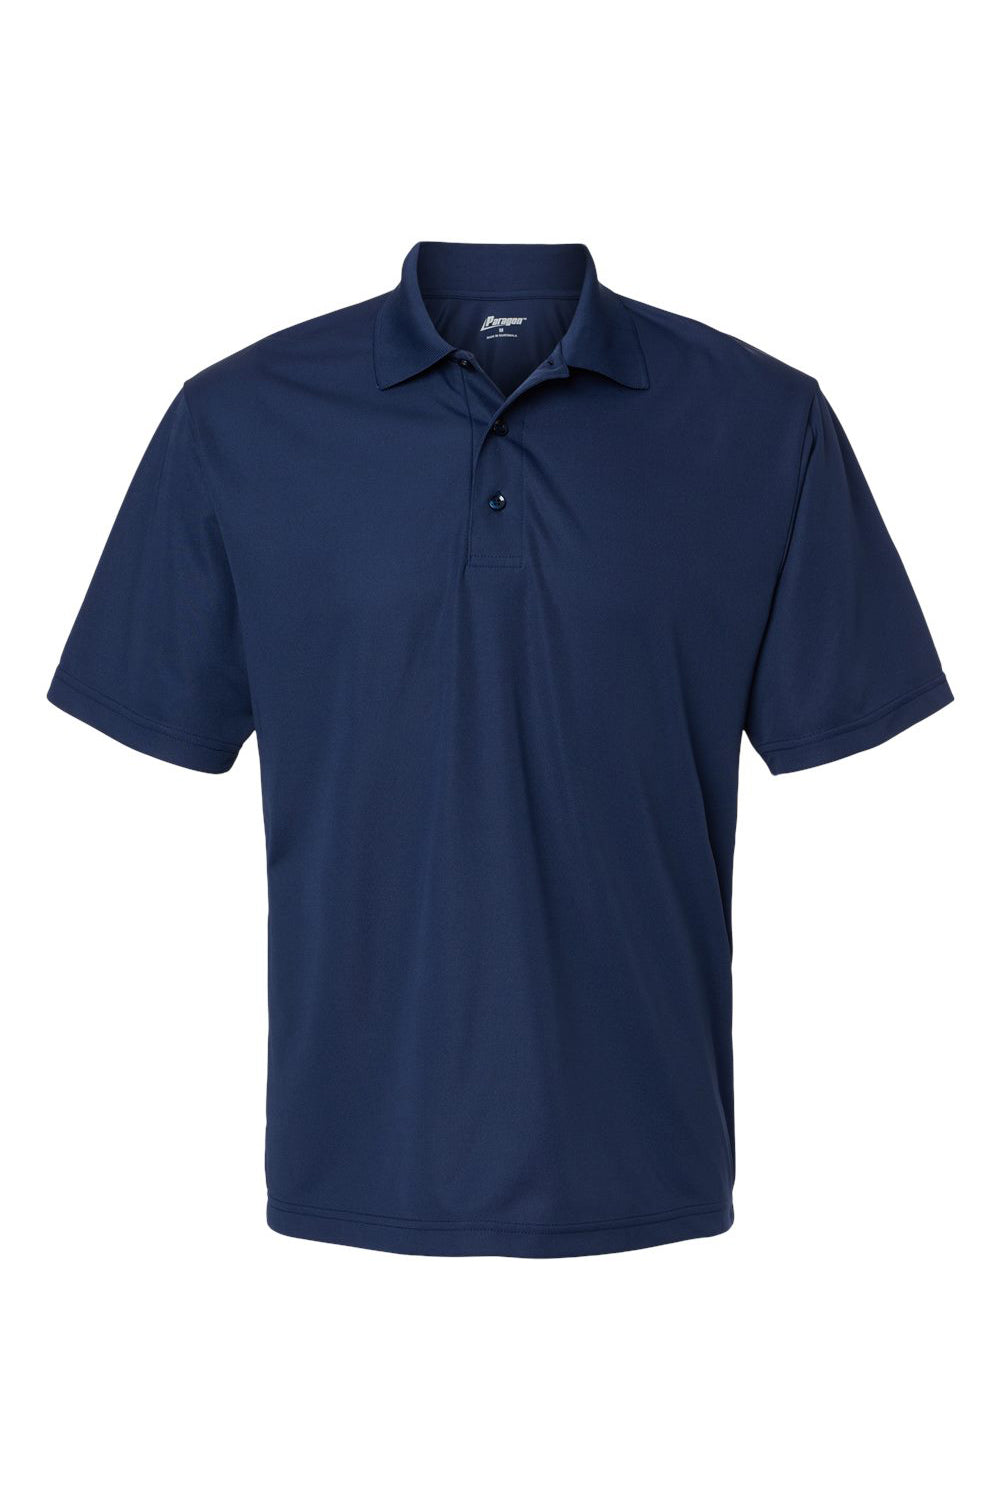 Paragon 500 Mens Sebring Performance Short Sleeve Polo Shirt Deep Navy Blue Flat Front